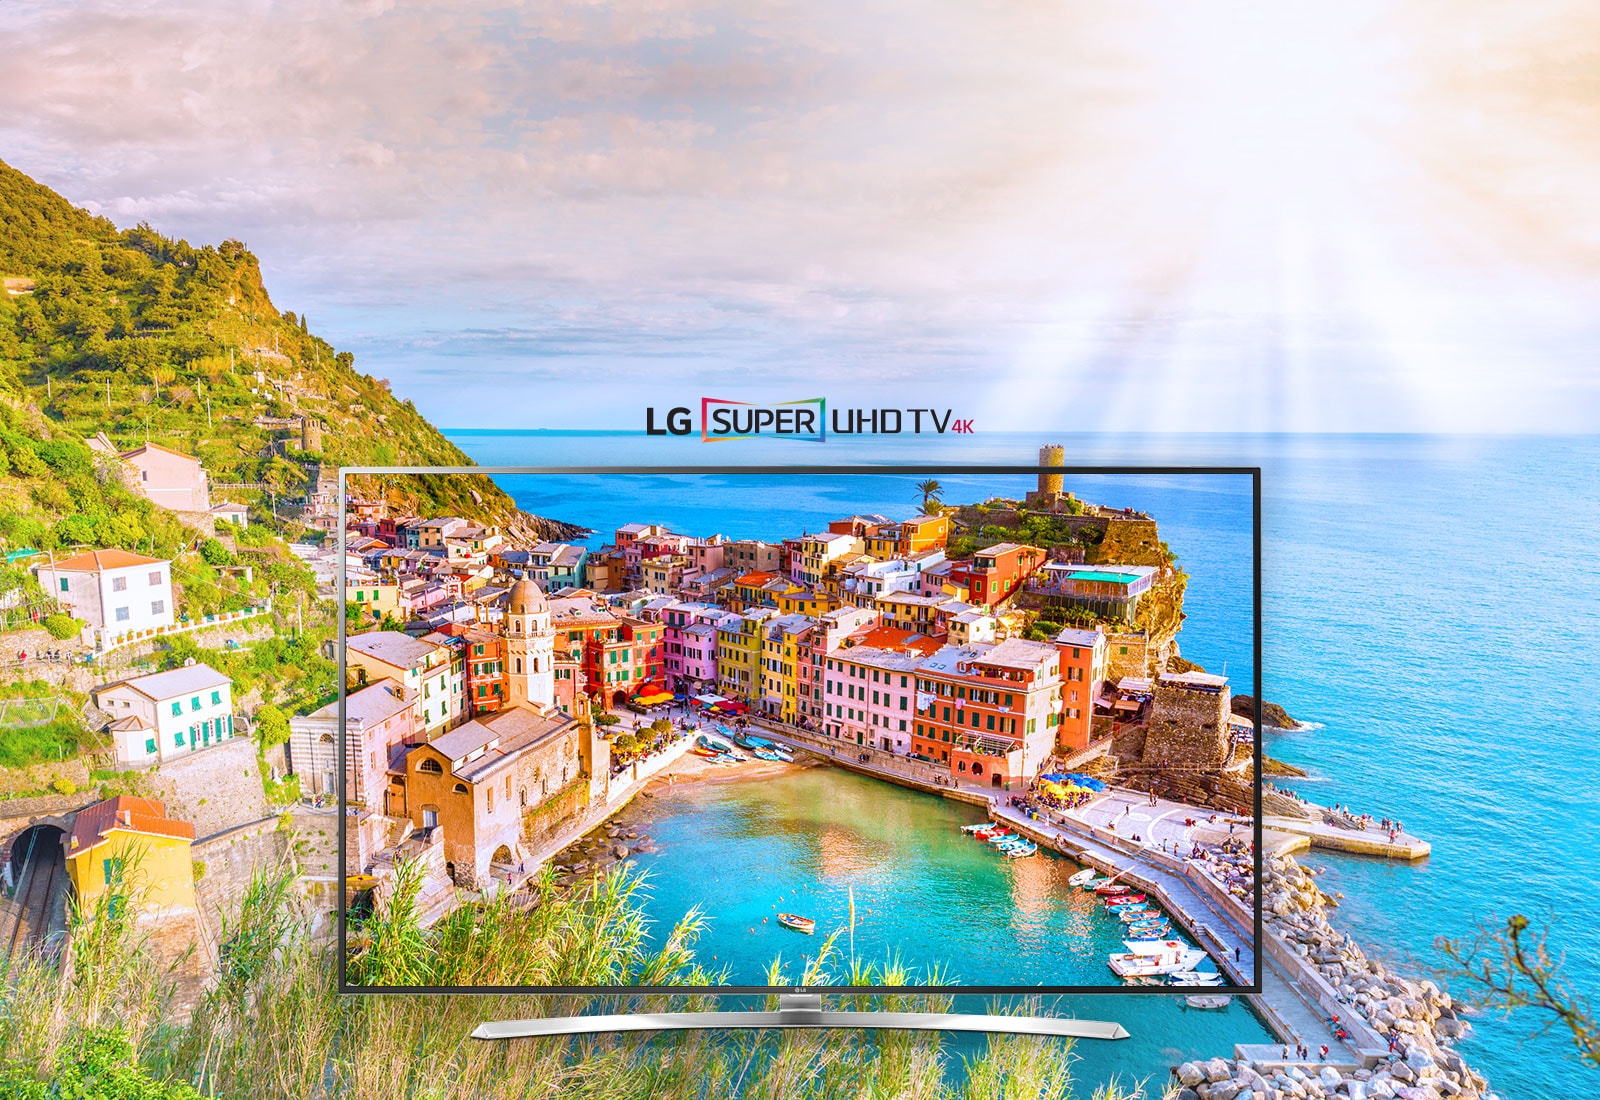 LG SUPER UHD TV 4K